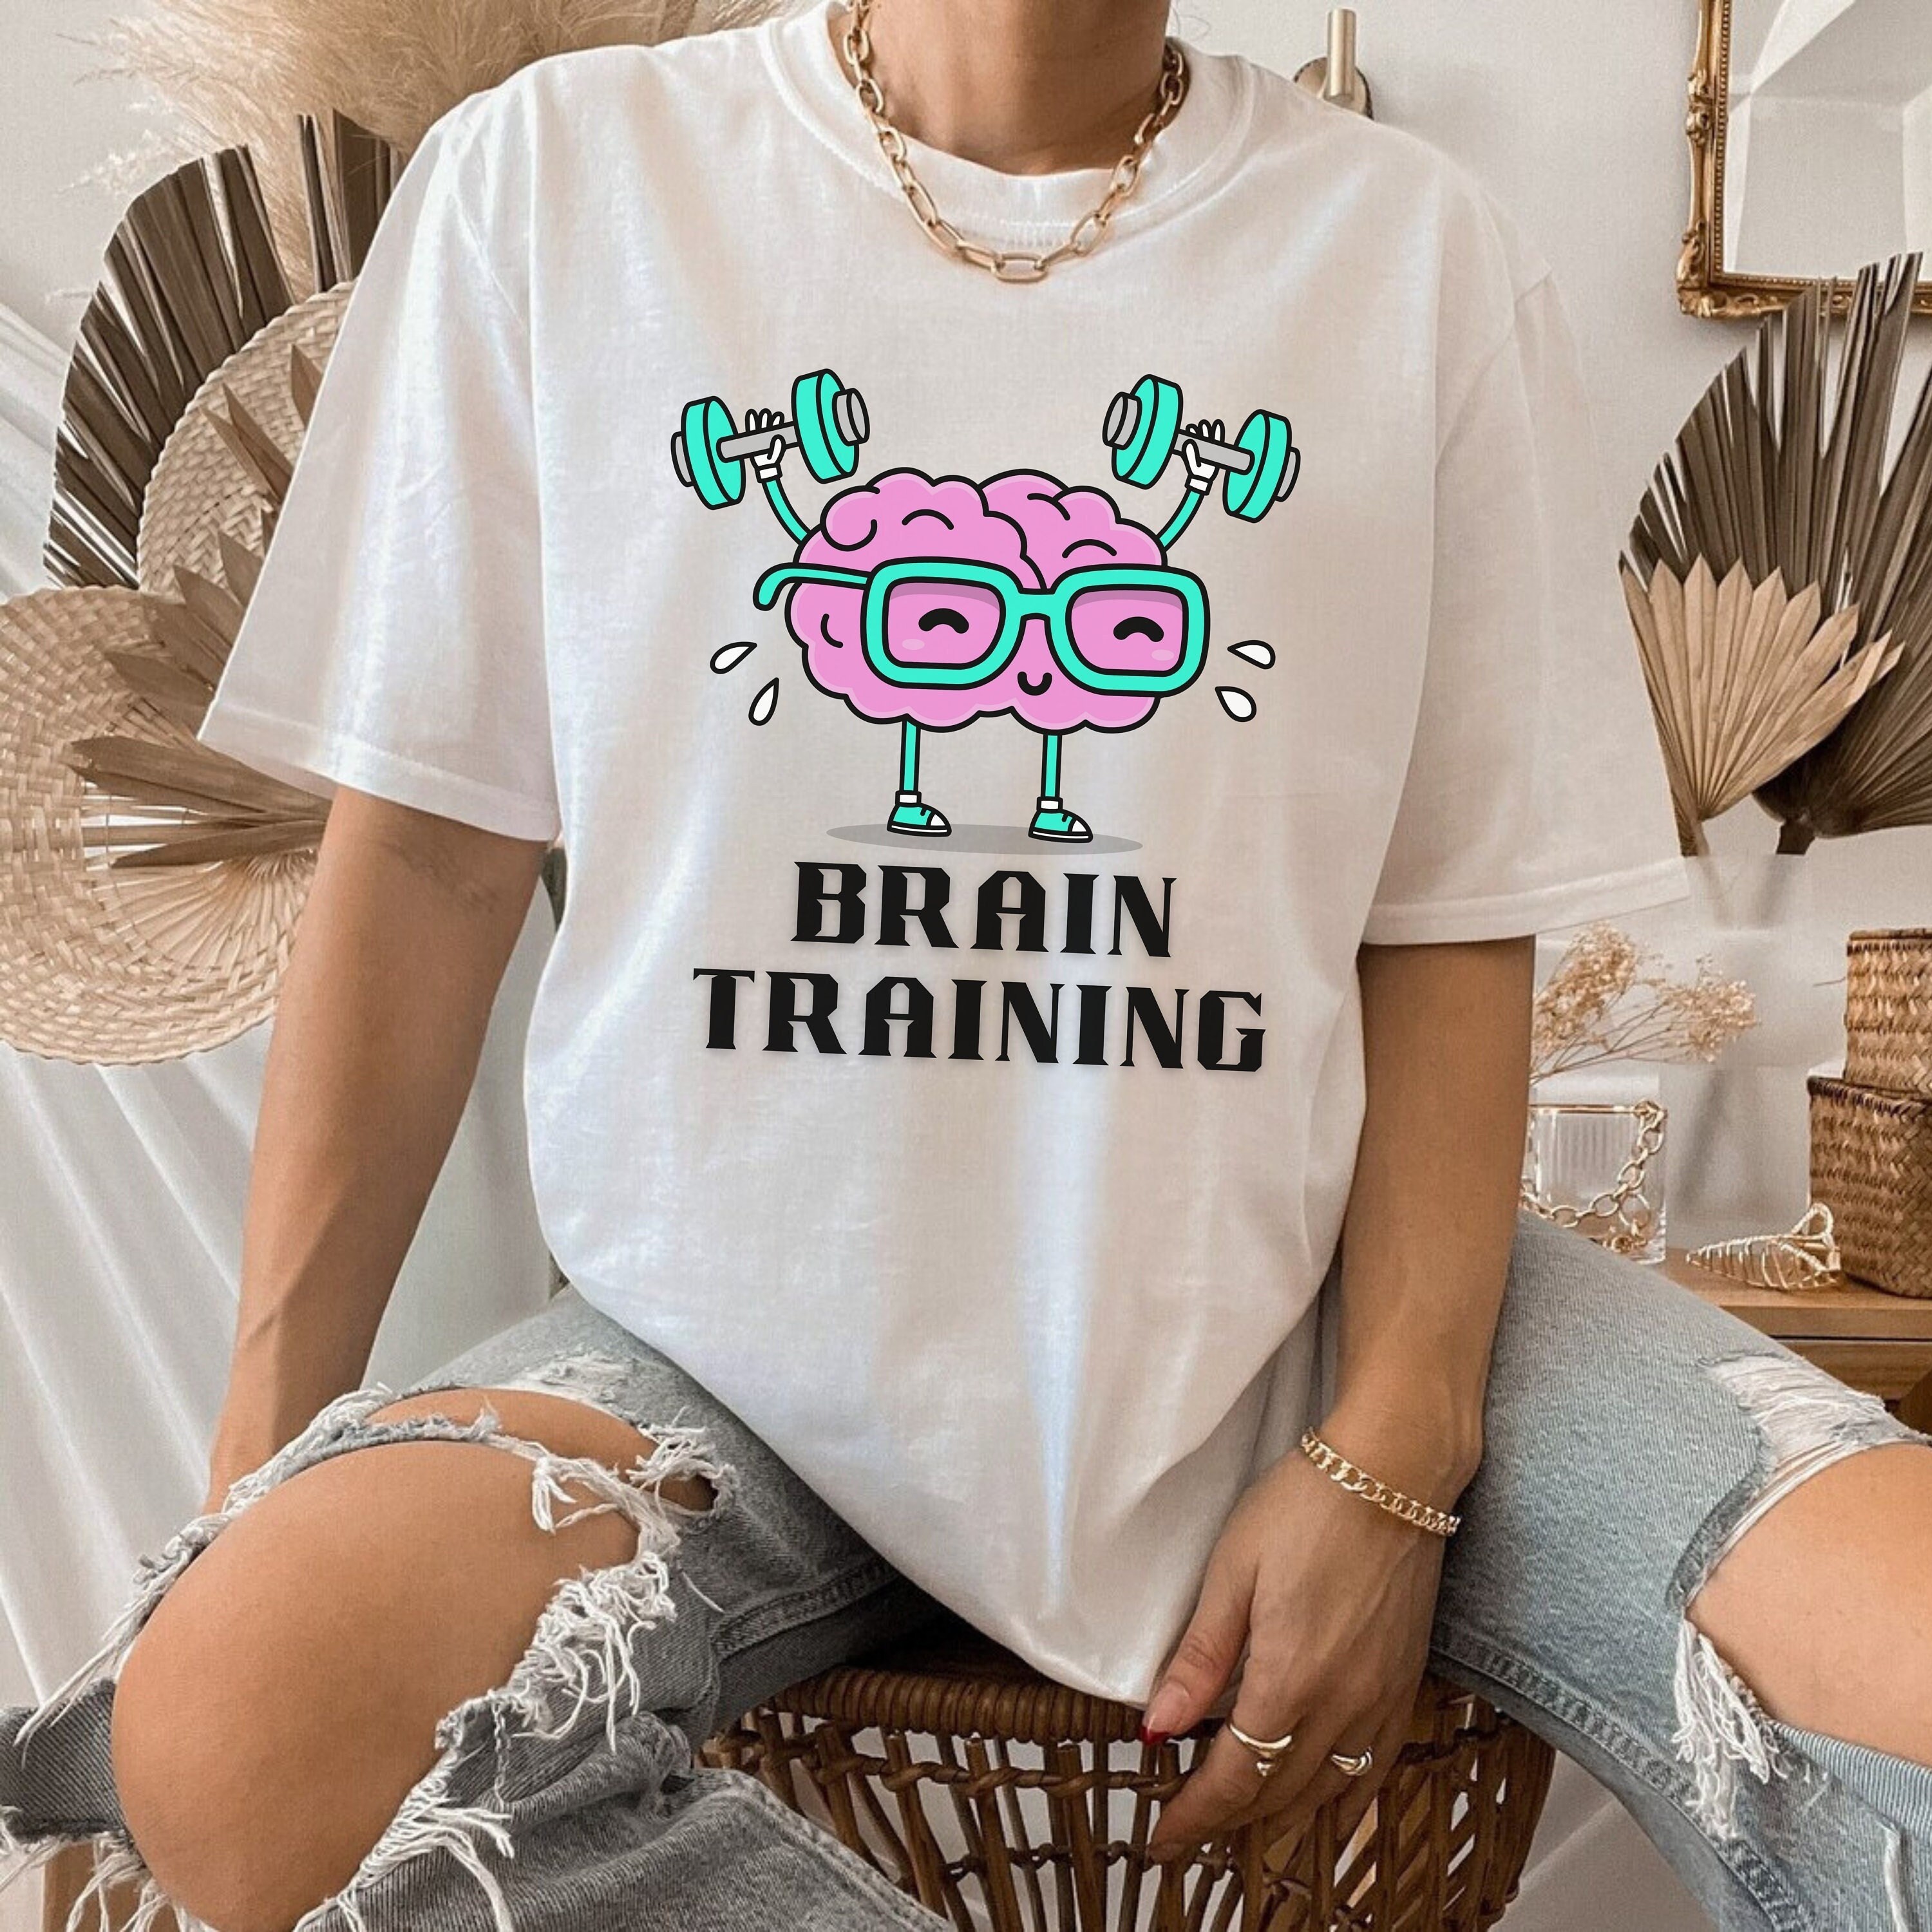 Brain training - Etsy Italia